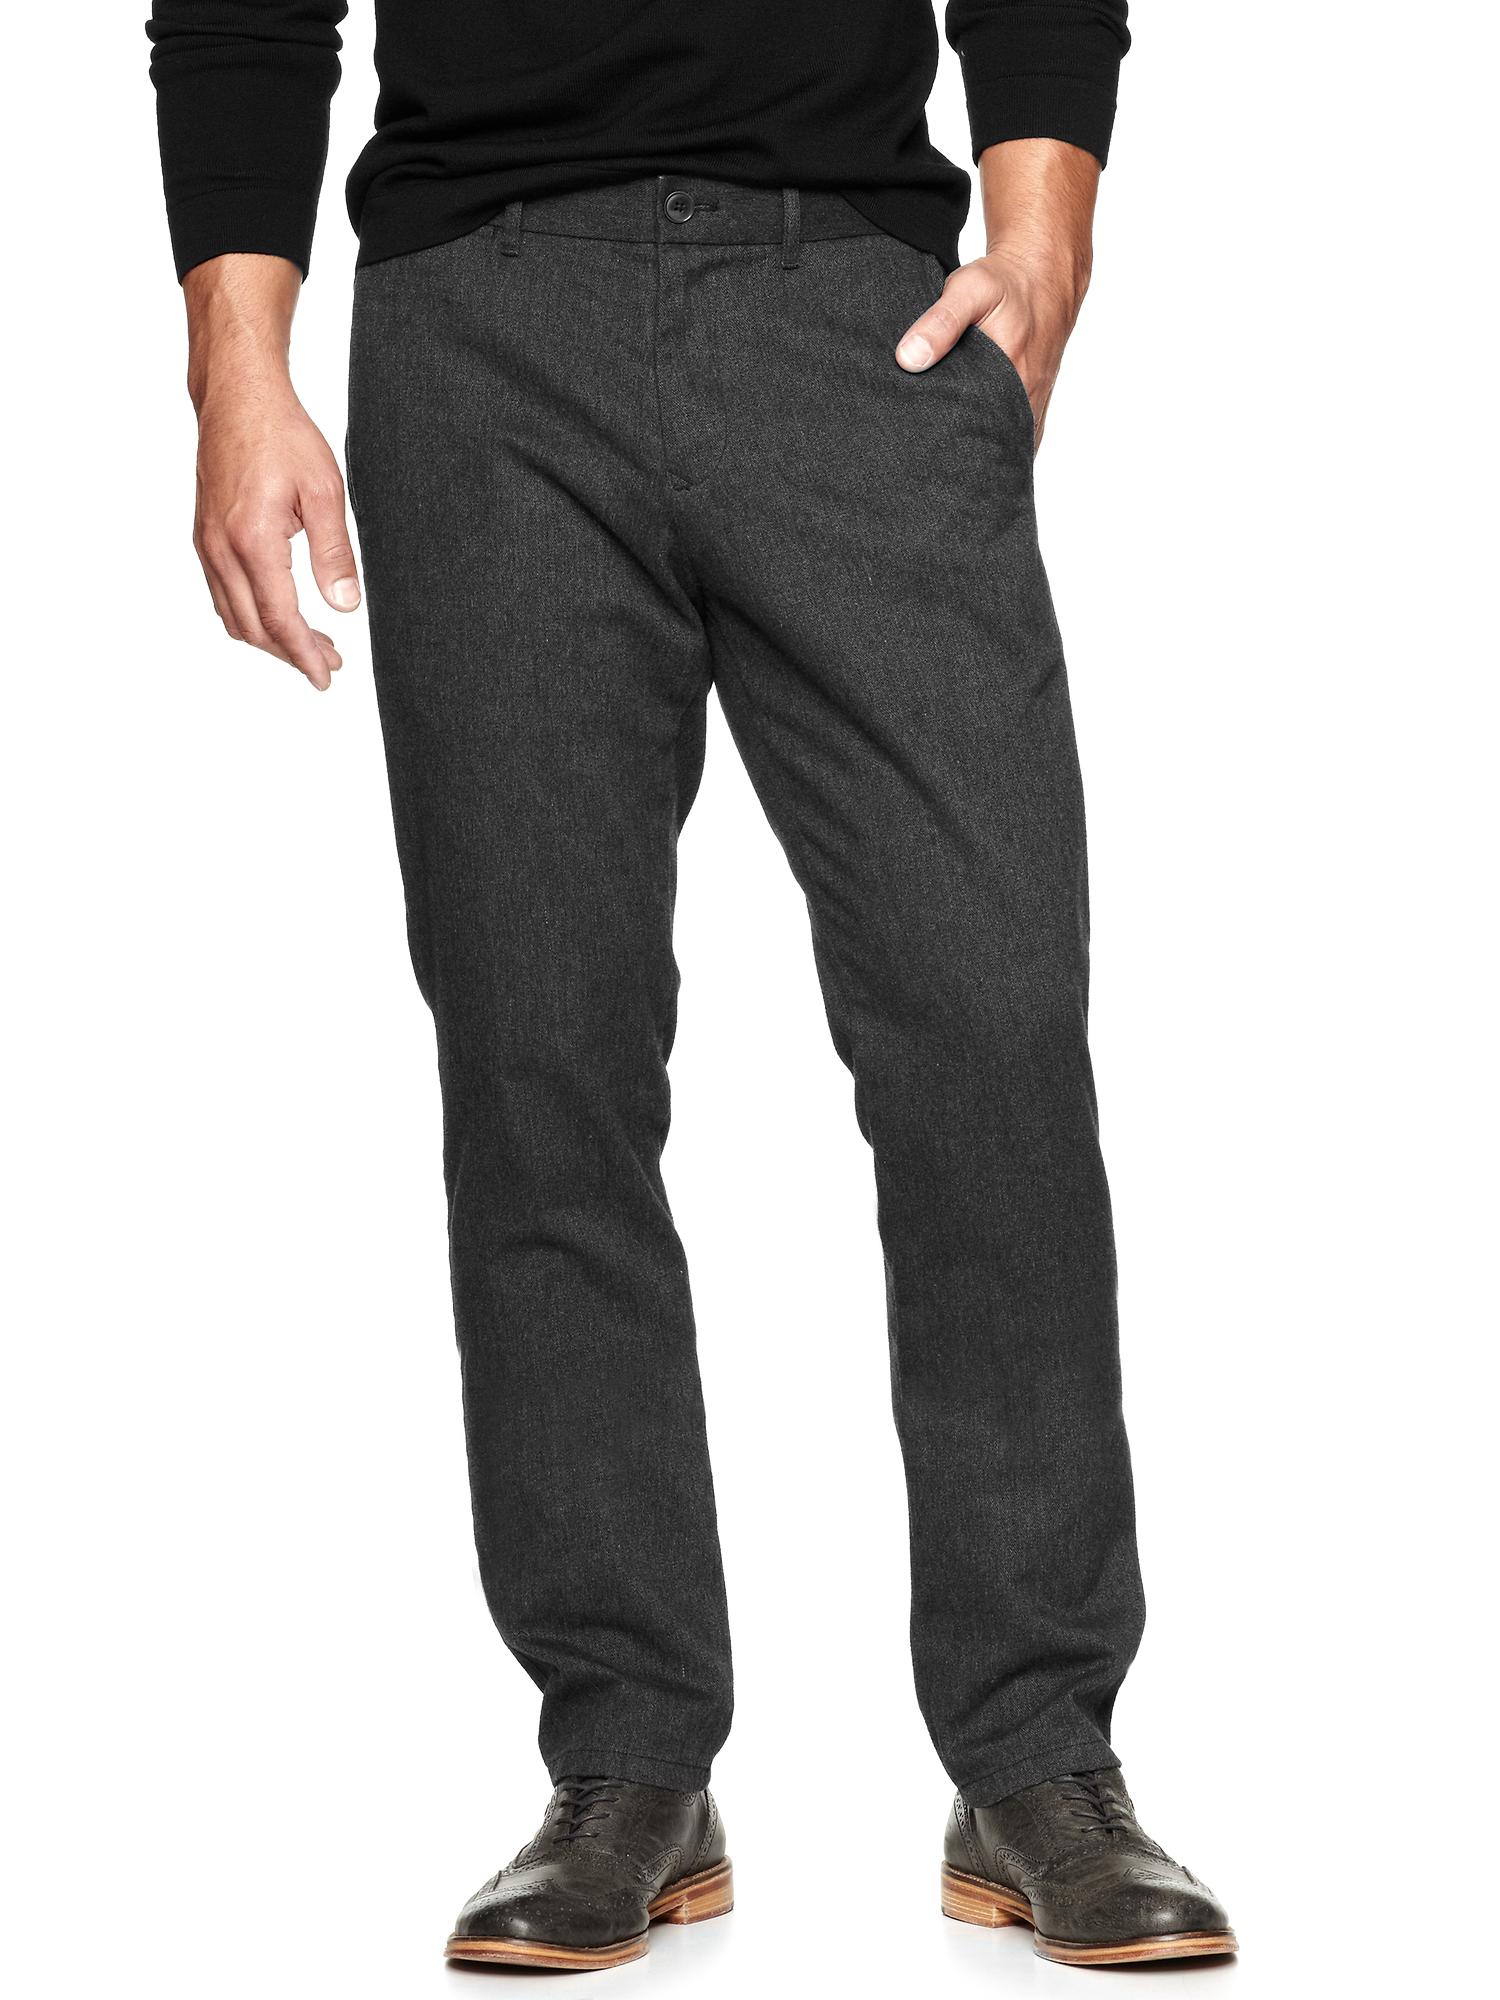 GAP Mens Essential Skinny Fit Khaki Chino Pants True Black 28X30 at Amazon  Men's Clothing store